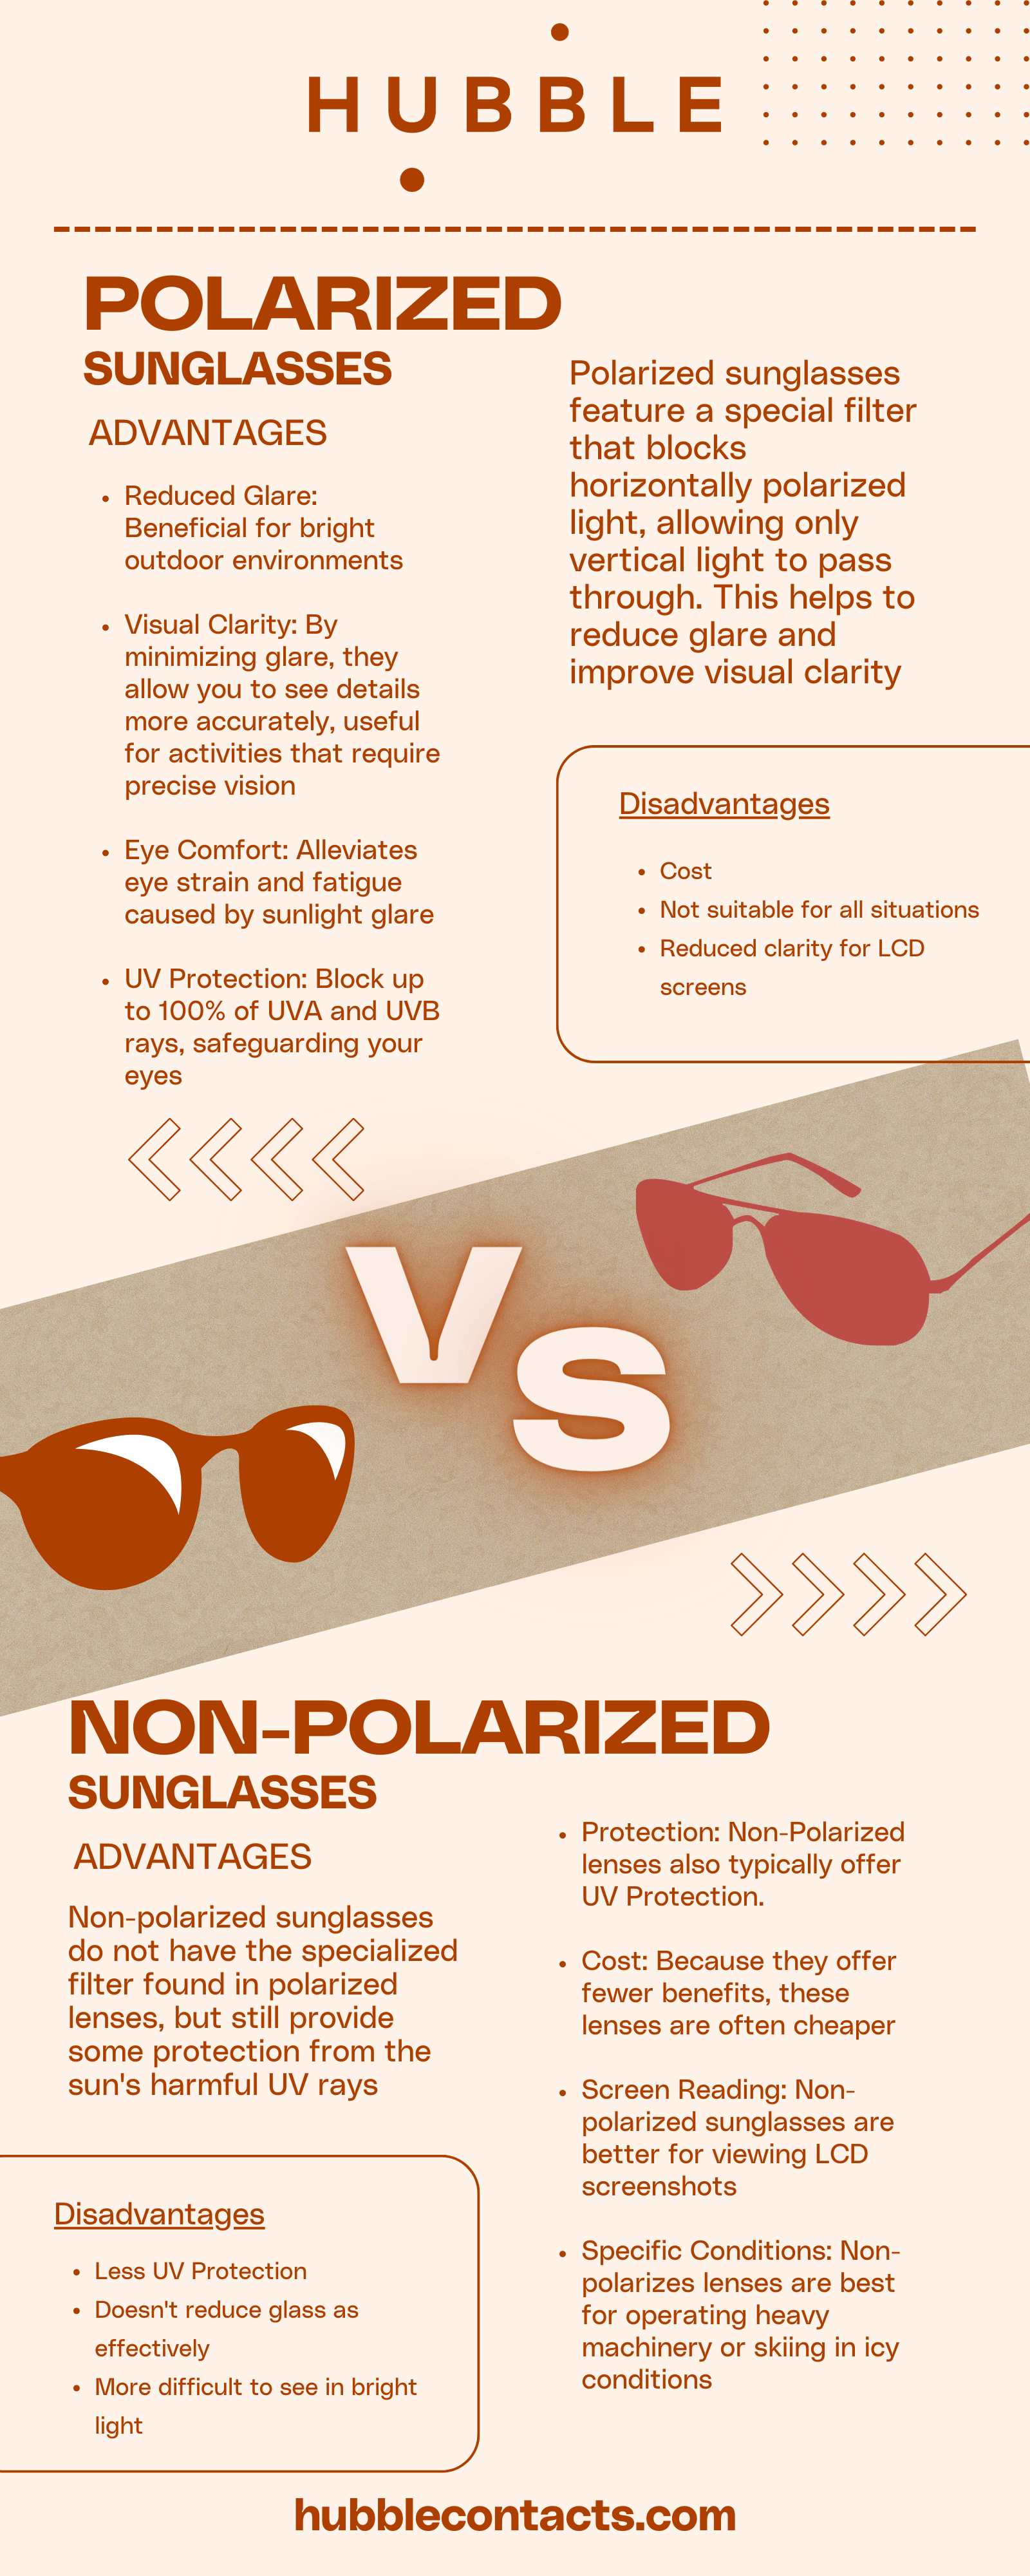 Polarized sunglasses: Best for reducing glare